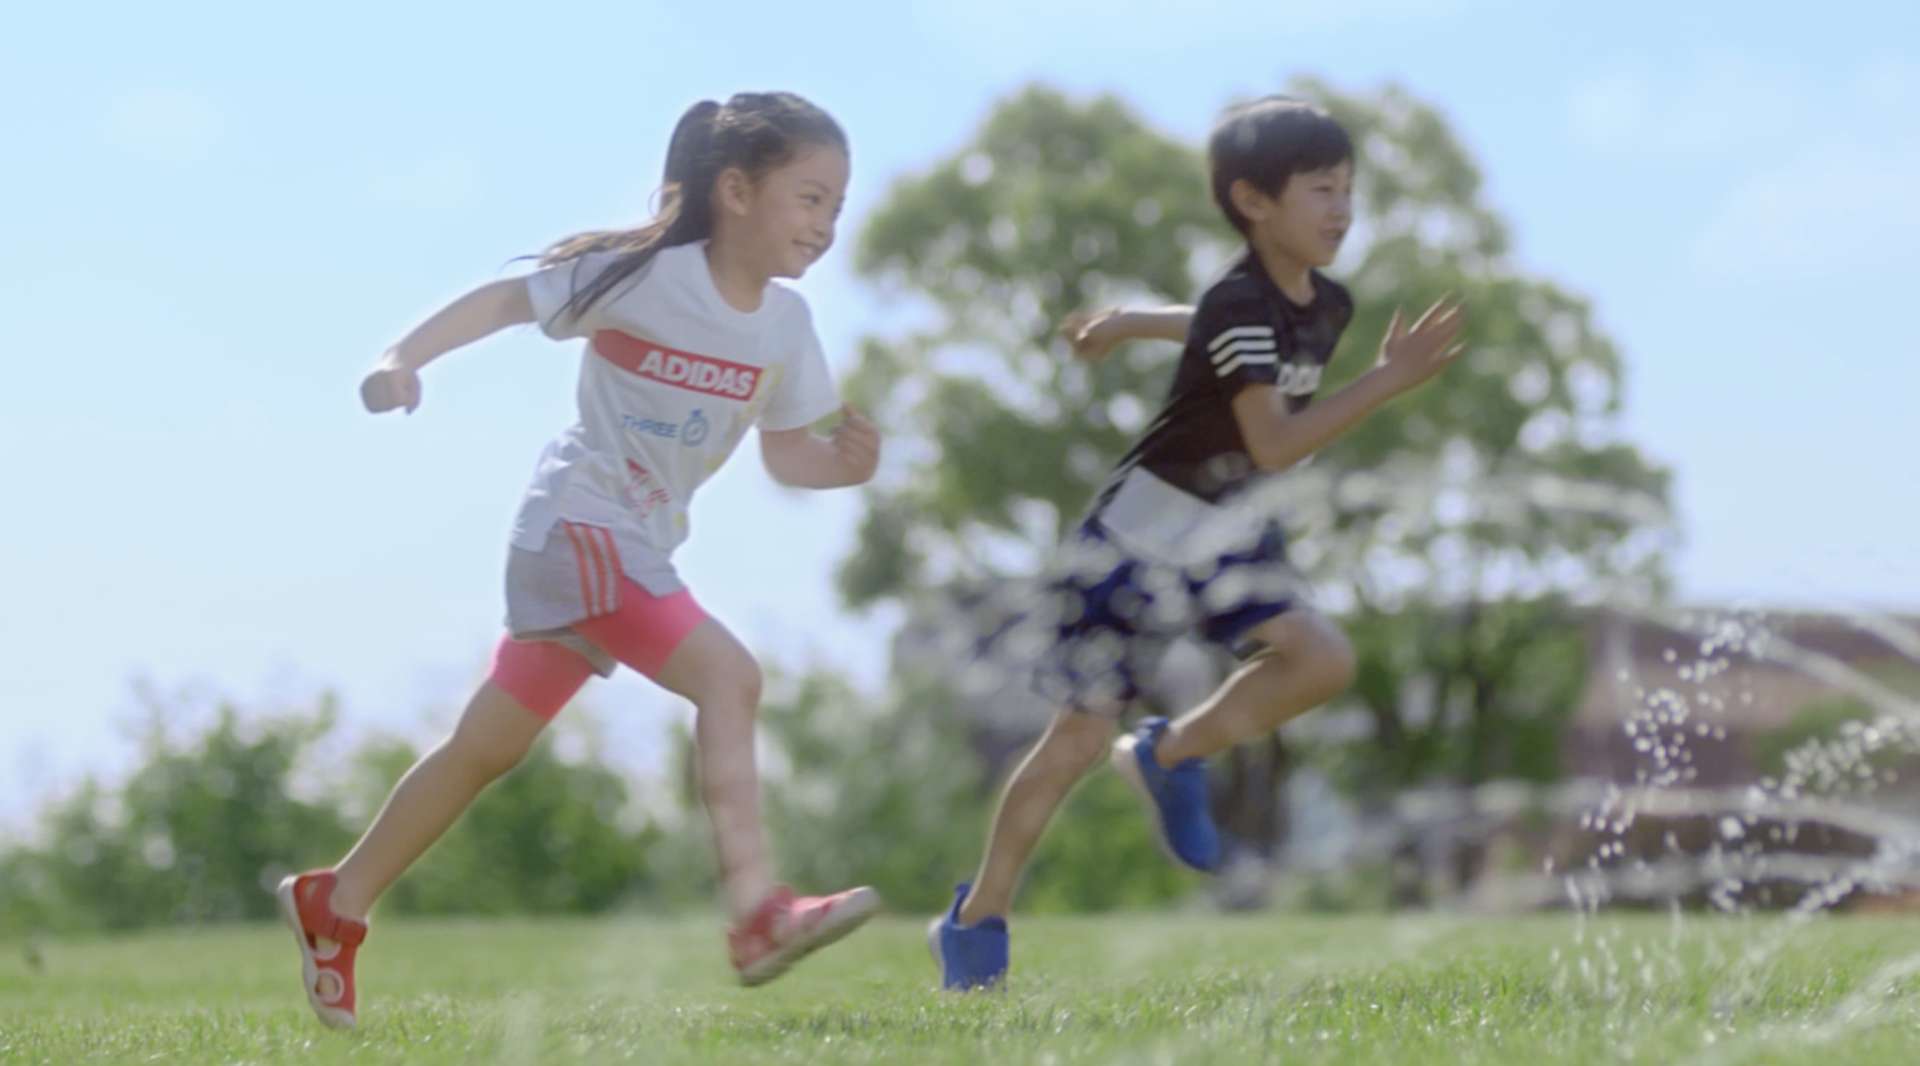 Adidas kids #运动有‘益’思#